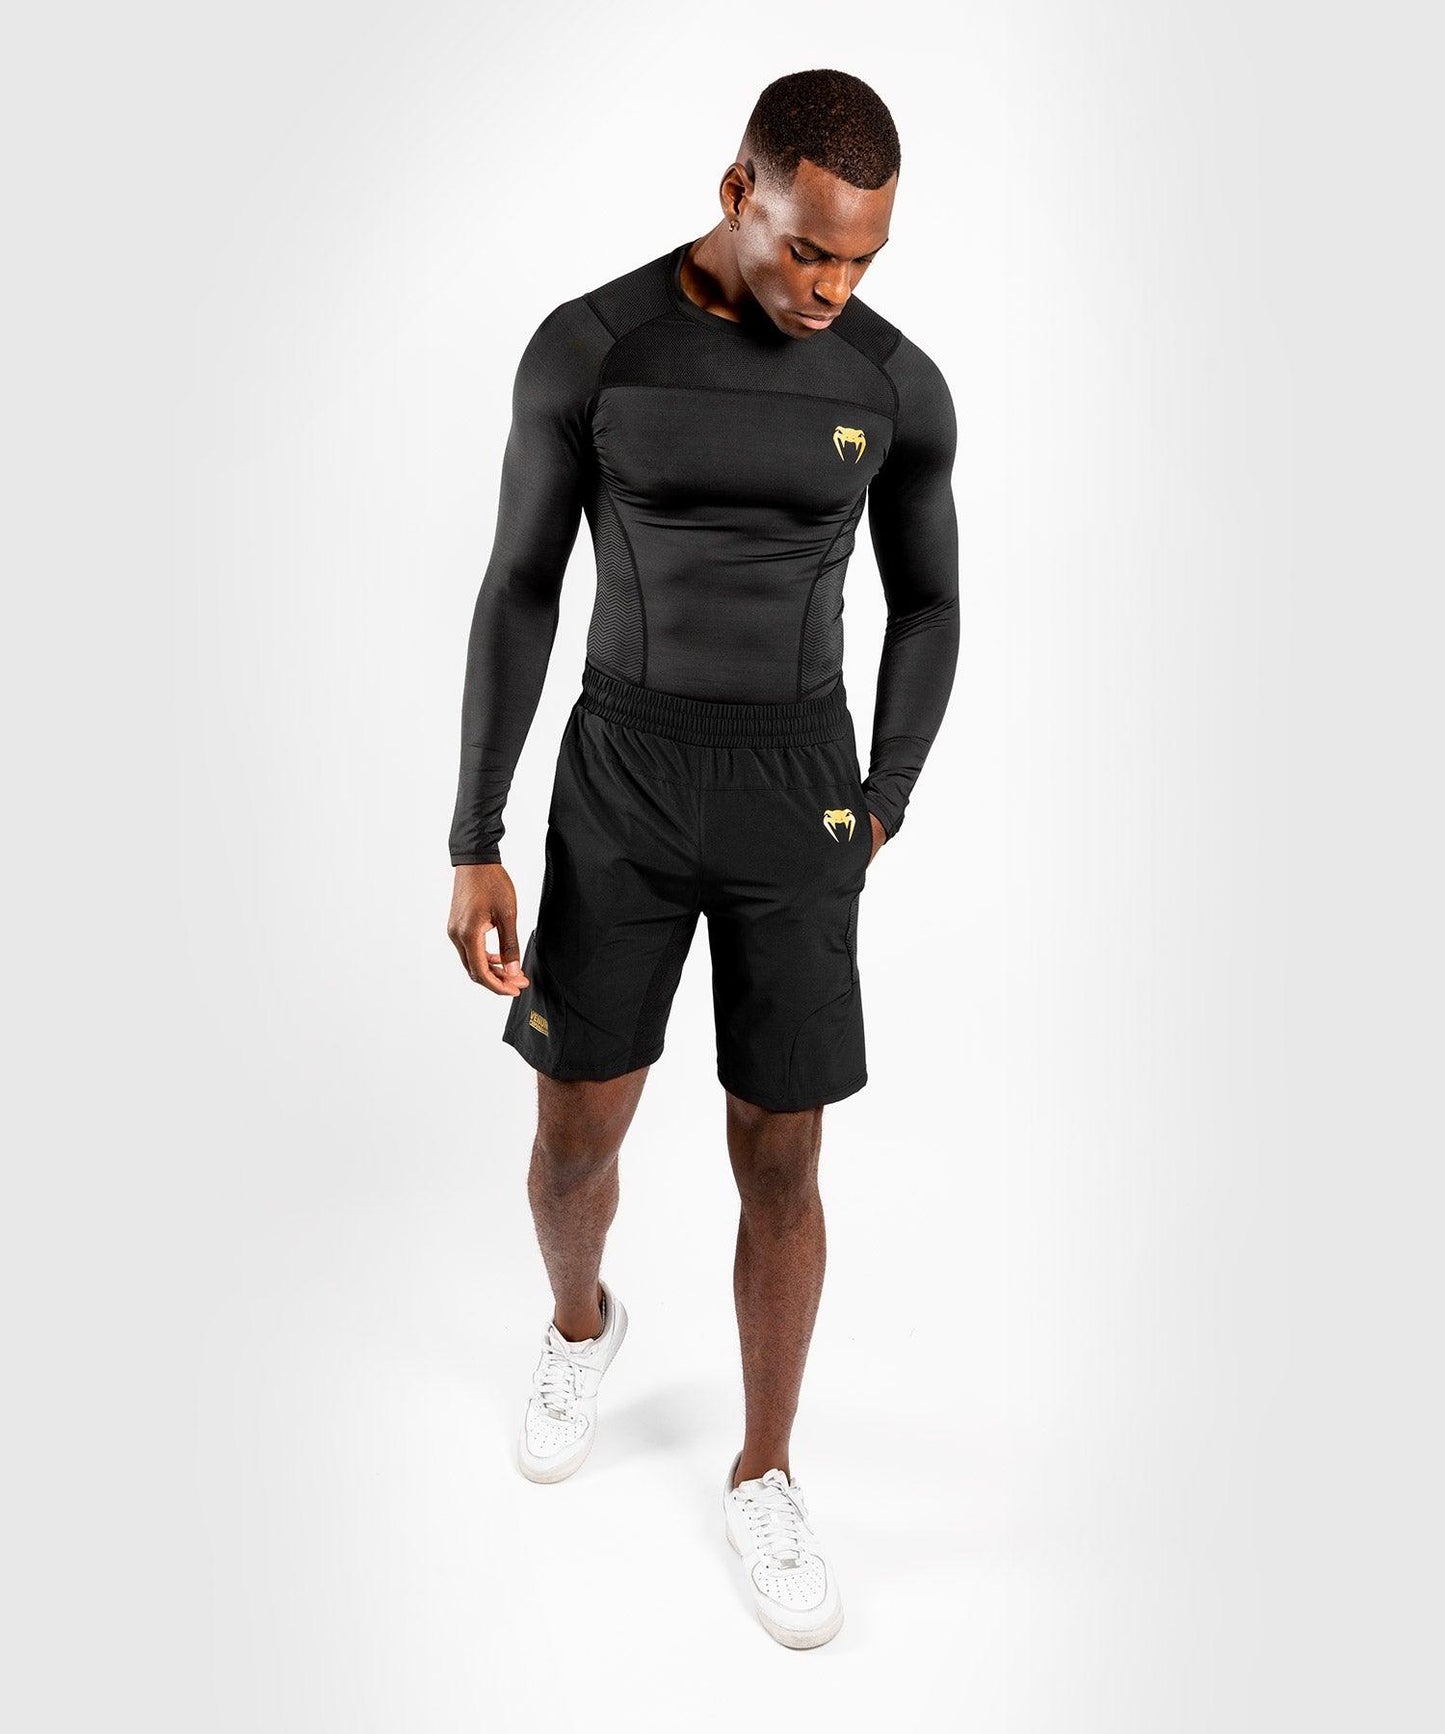 Venum G-Fit Training Shorts - Black/Gold Picture 8